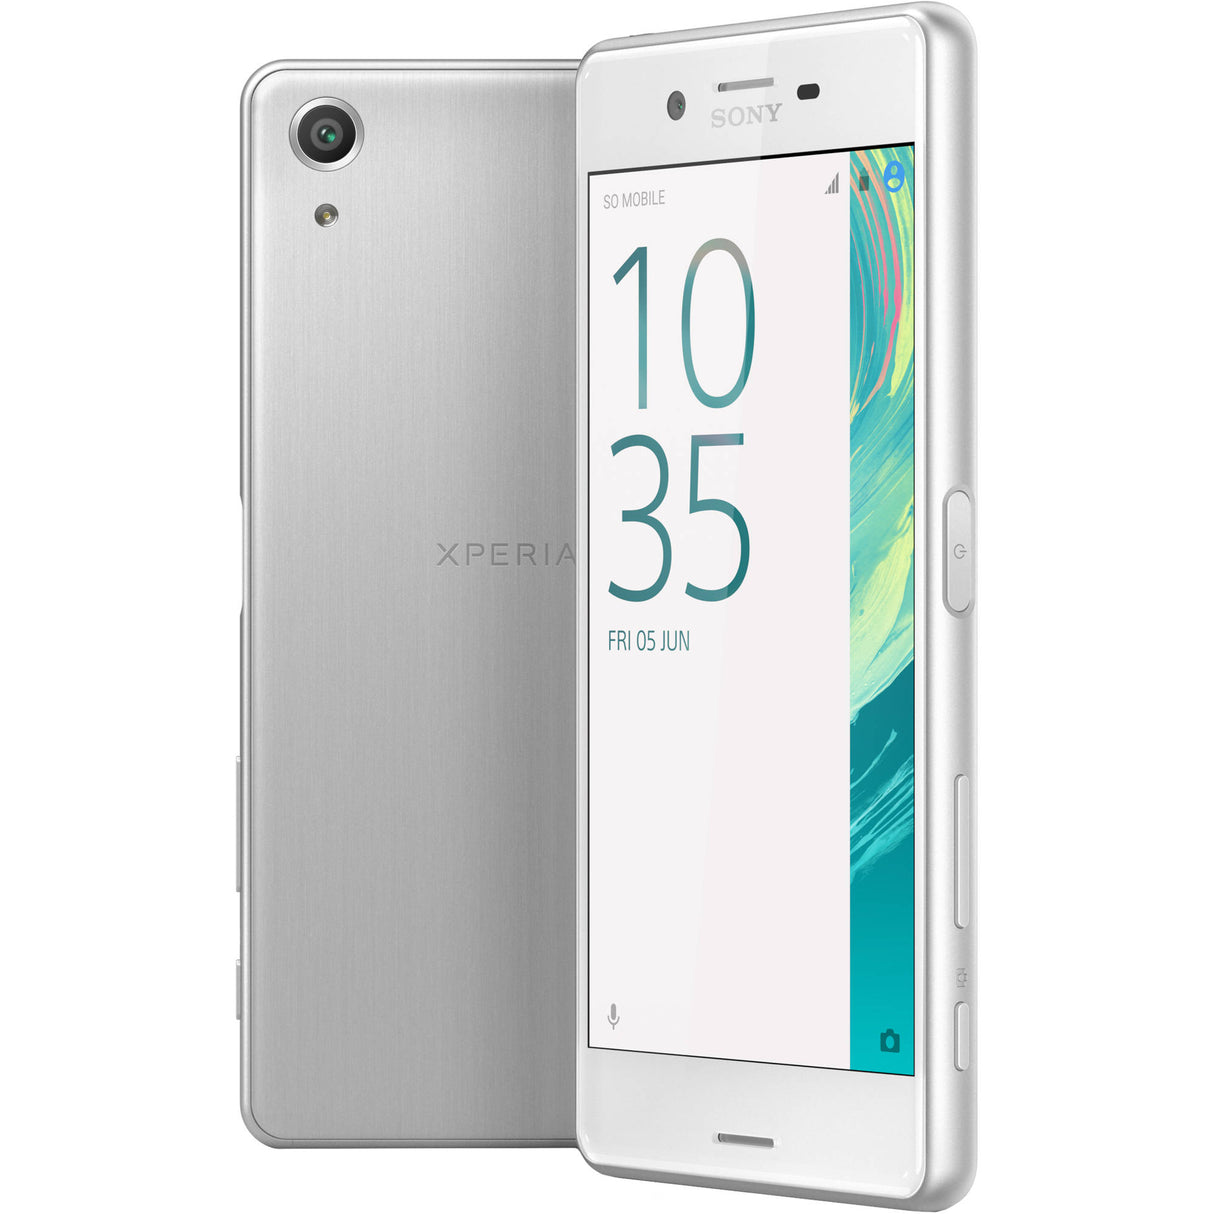 Sony Xperia X Performance - 32 GB - White - Unlocked - GSM